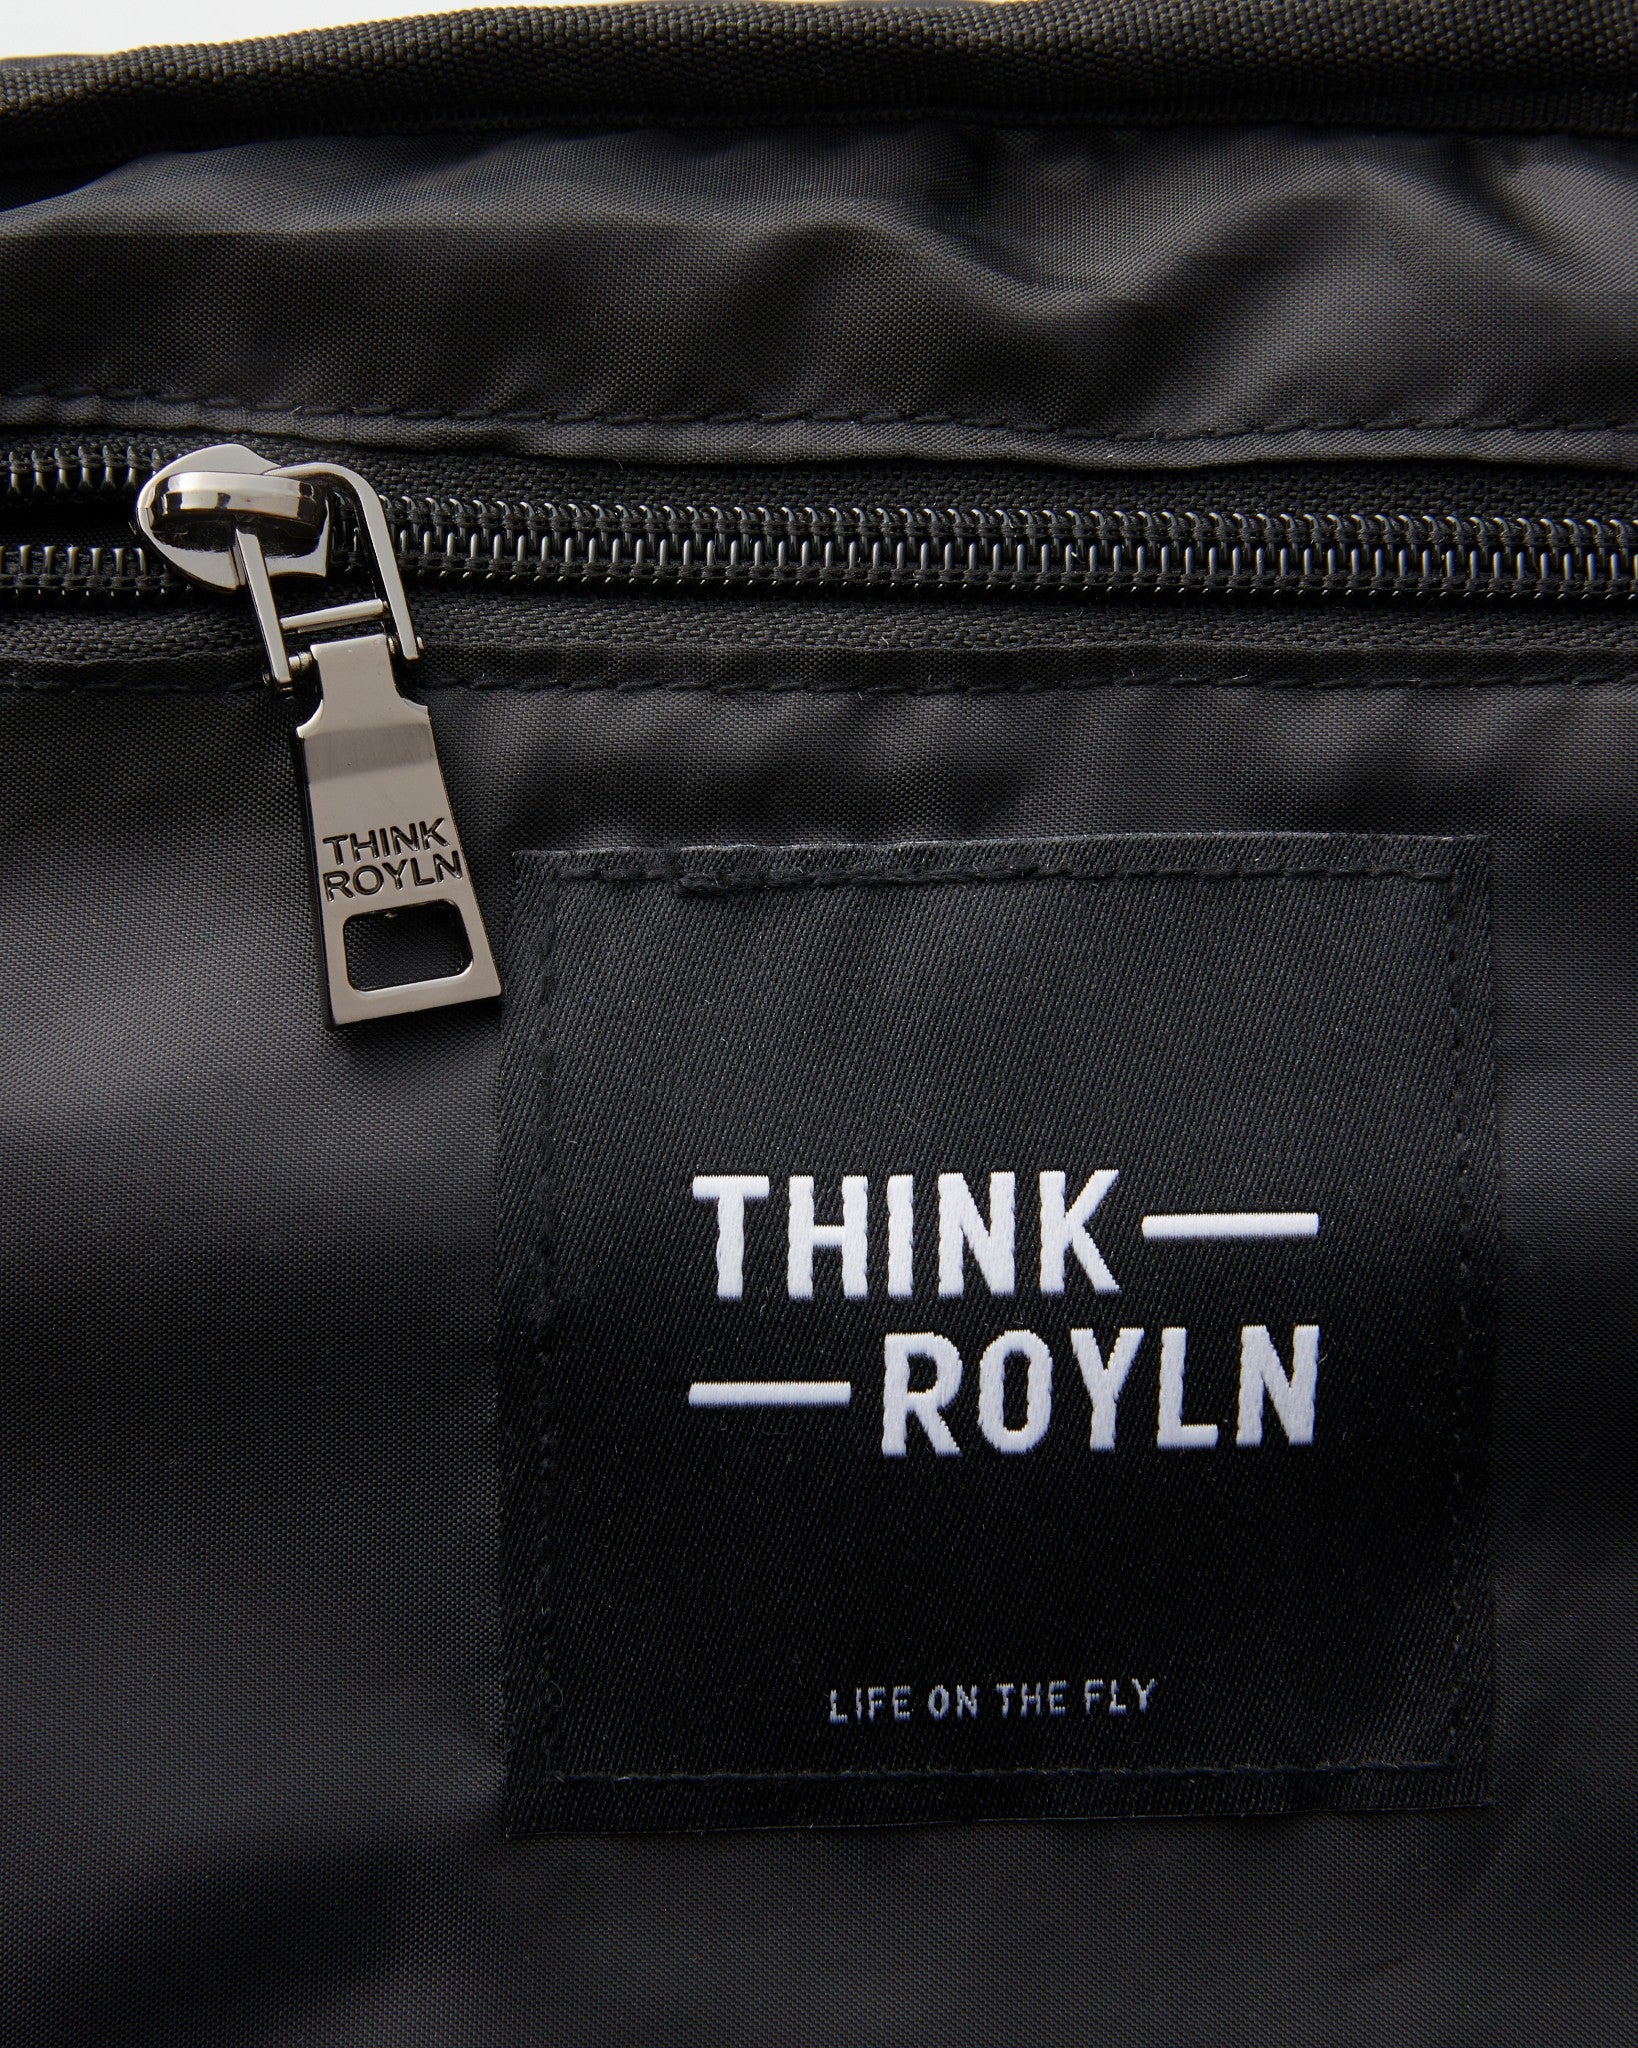 THINK ROYLN, Bags, Think Royln Life On The Fly